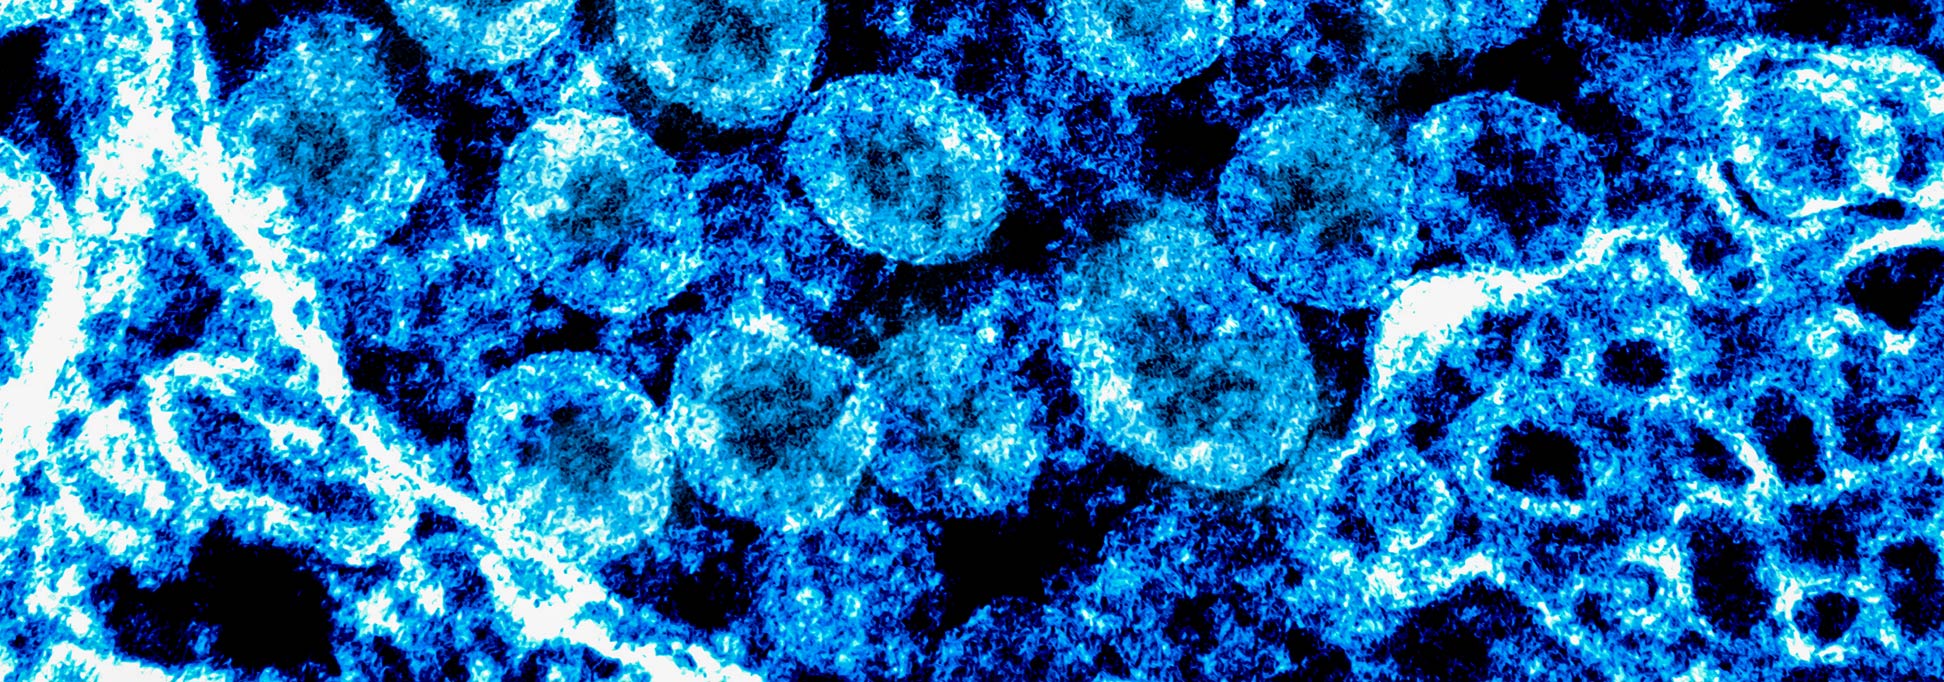 Transmission electron micrograph of SARS-CoV-2 virus